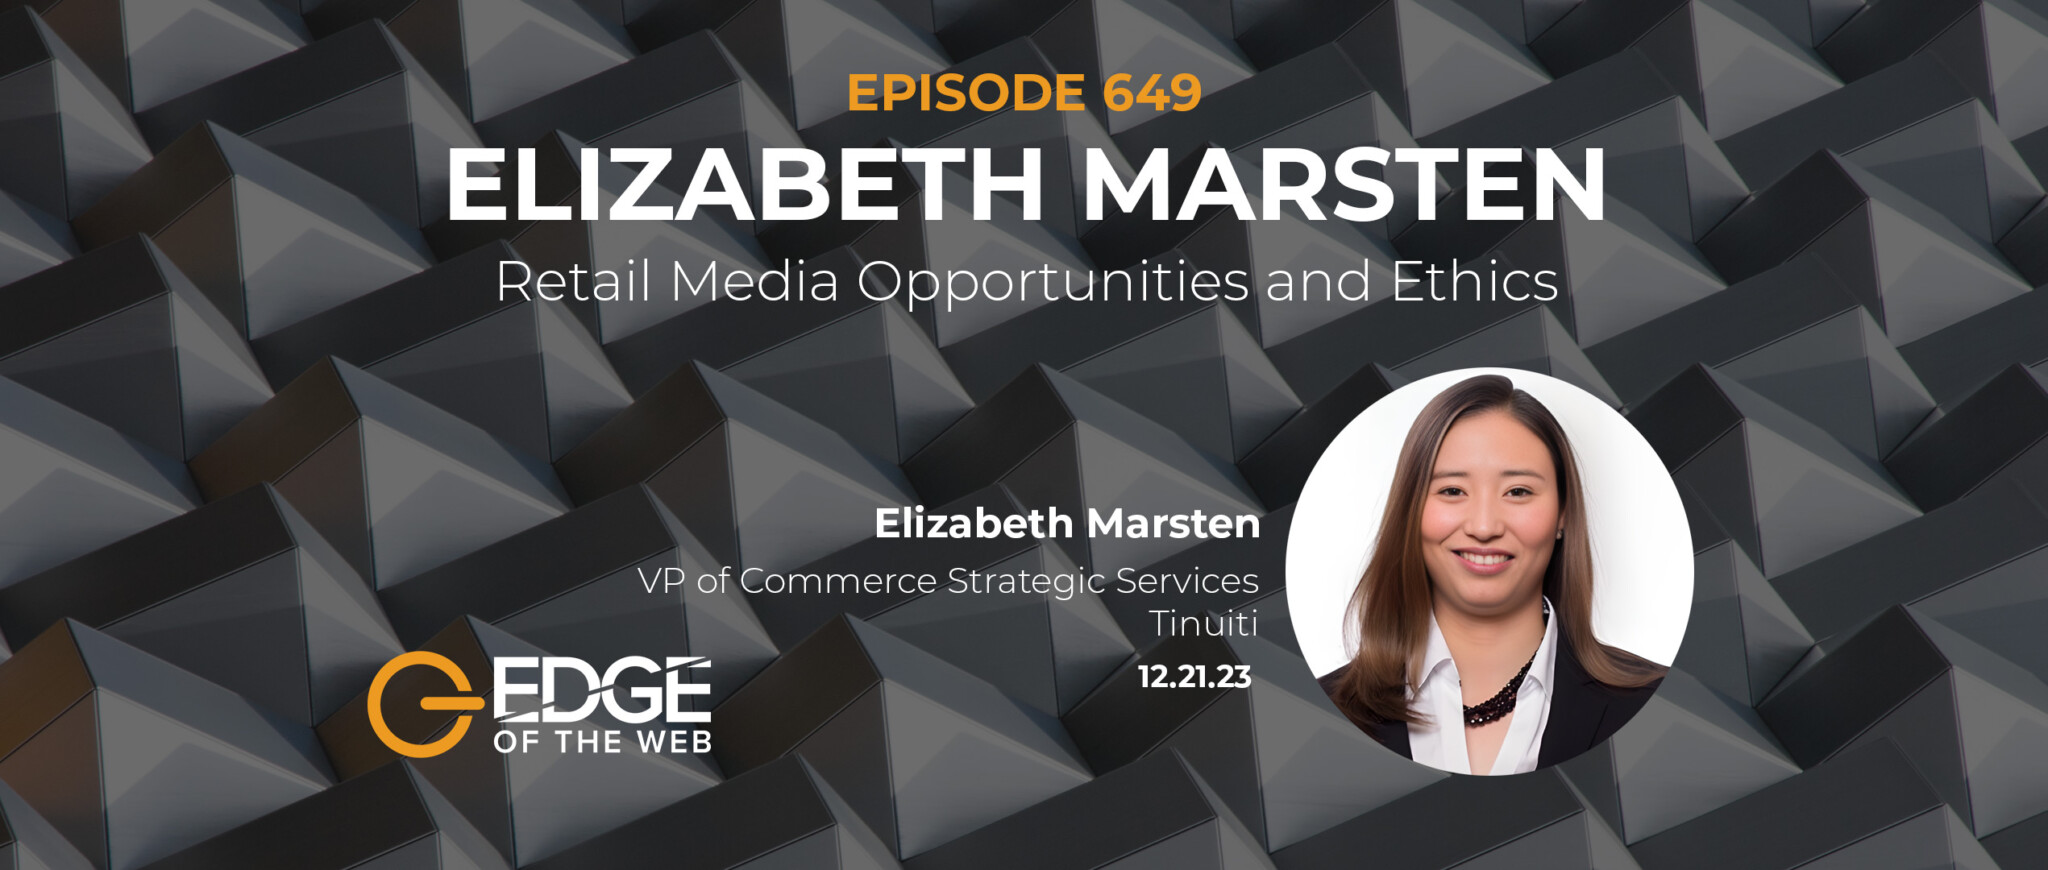 Episode 649: Retail Media Opportunities and Ethics w/Elizabeth Marsten